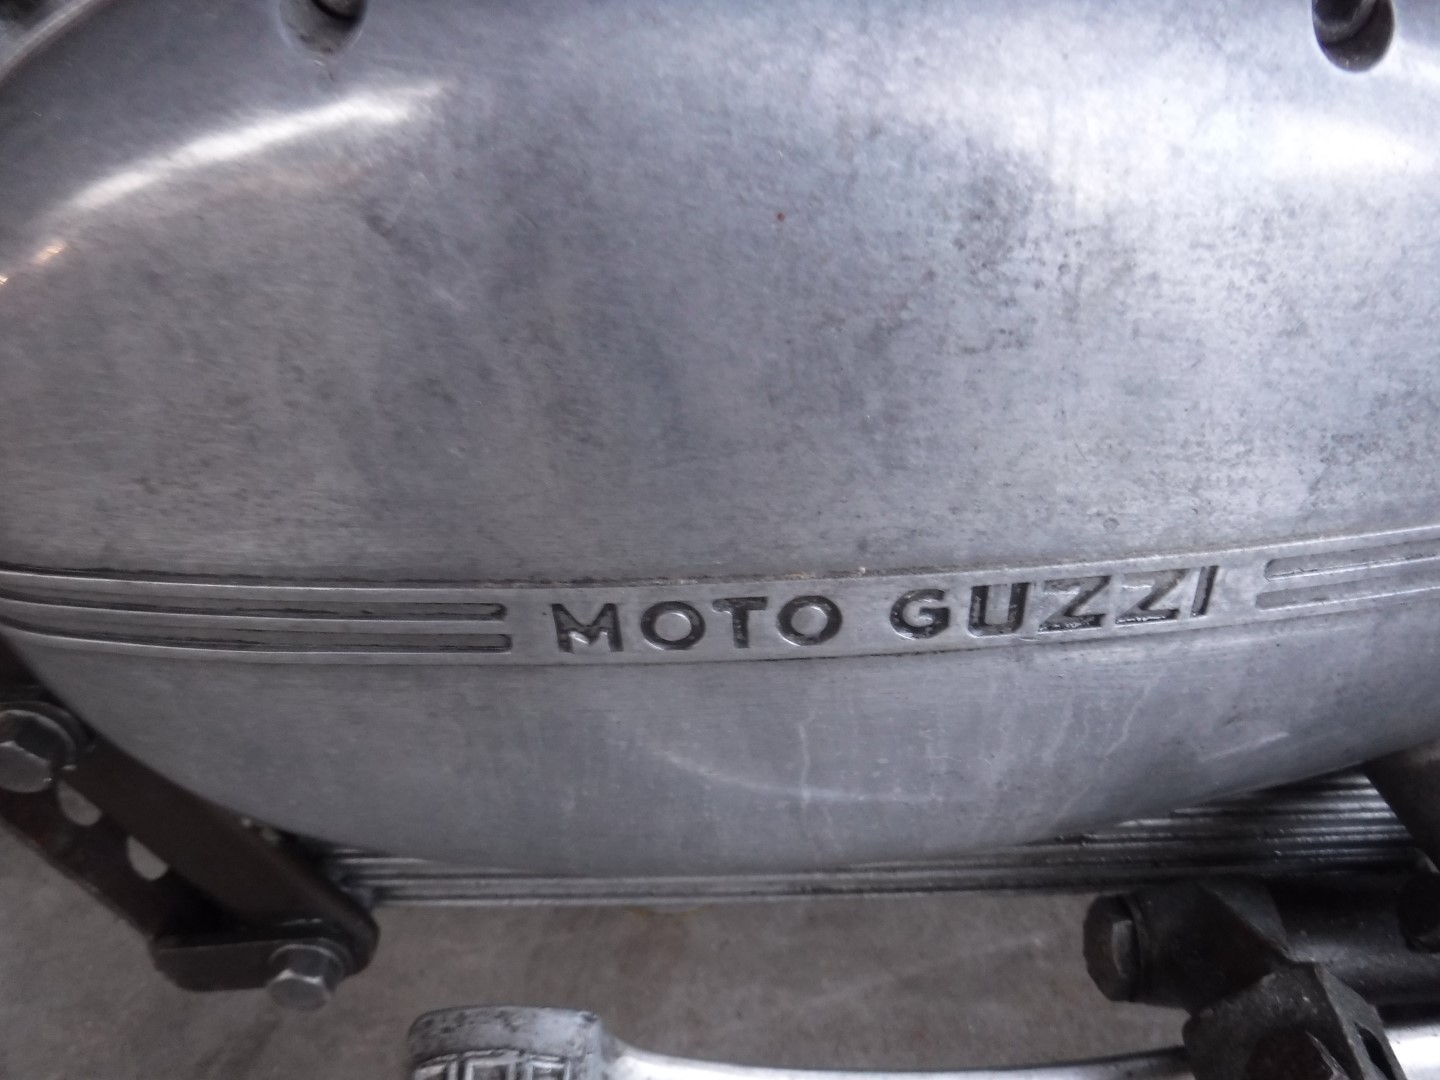 Moto Guzzi-Stornello 125cc Sport | Joop Stolze Classic Cars